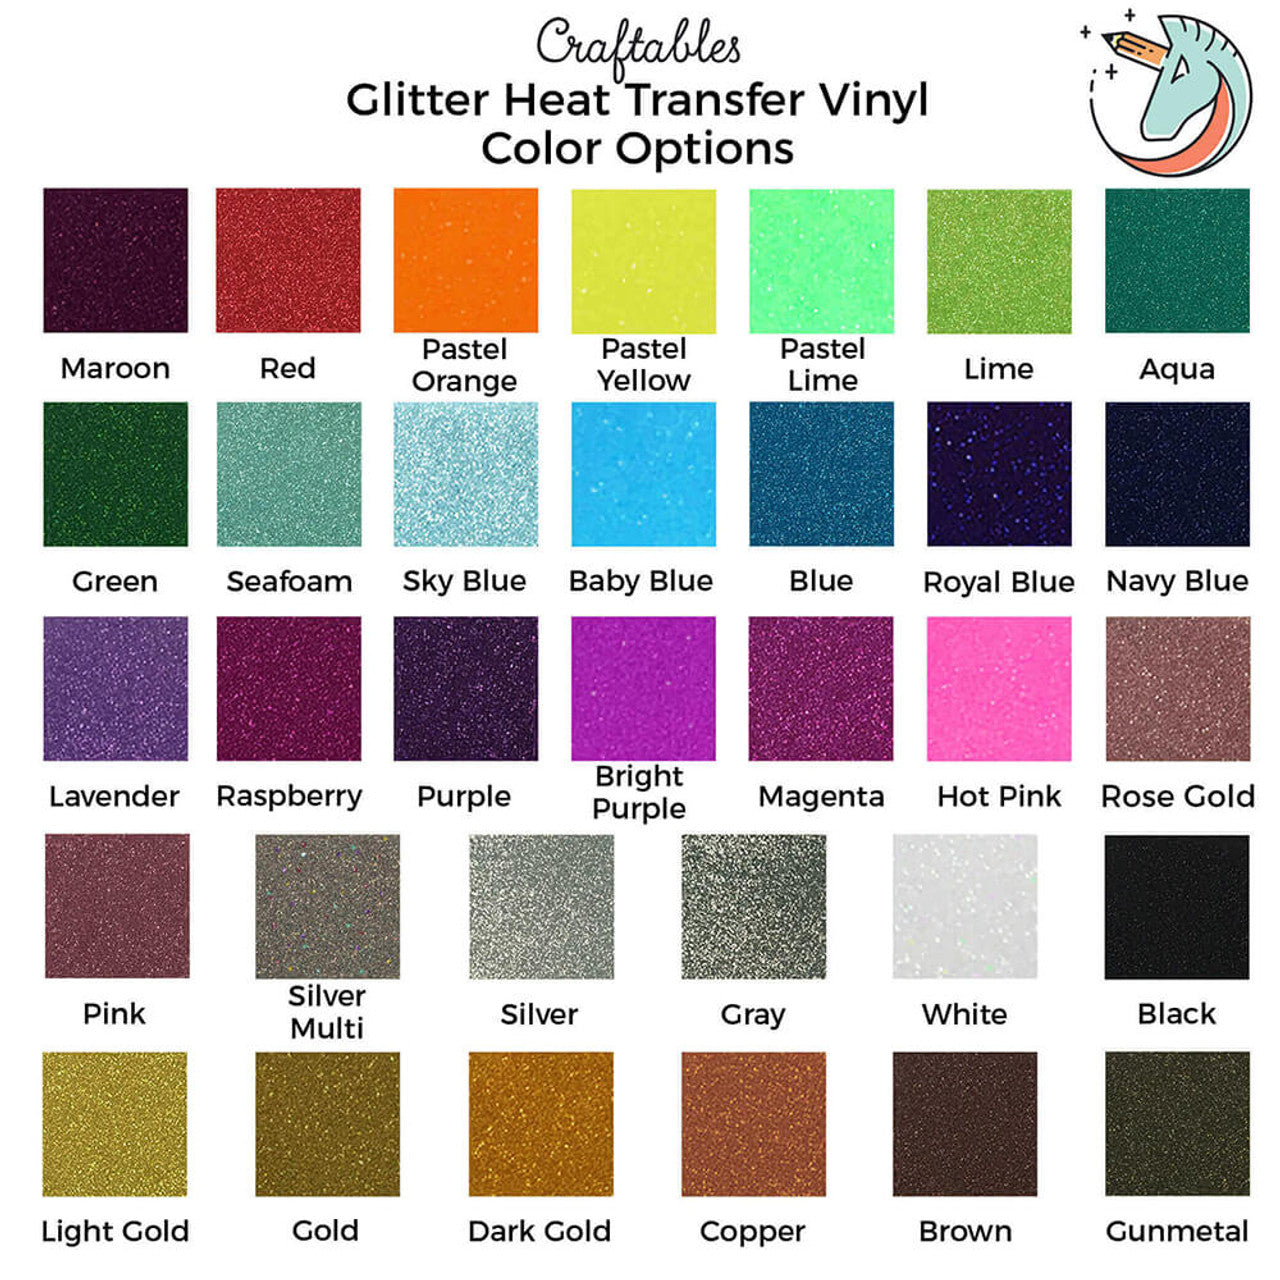 Pink Glitter Heat Transfer Vinyl Sheets By Craftables